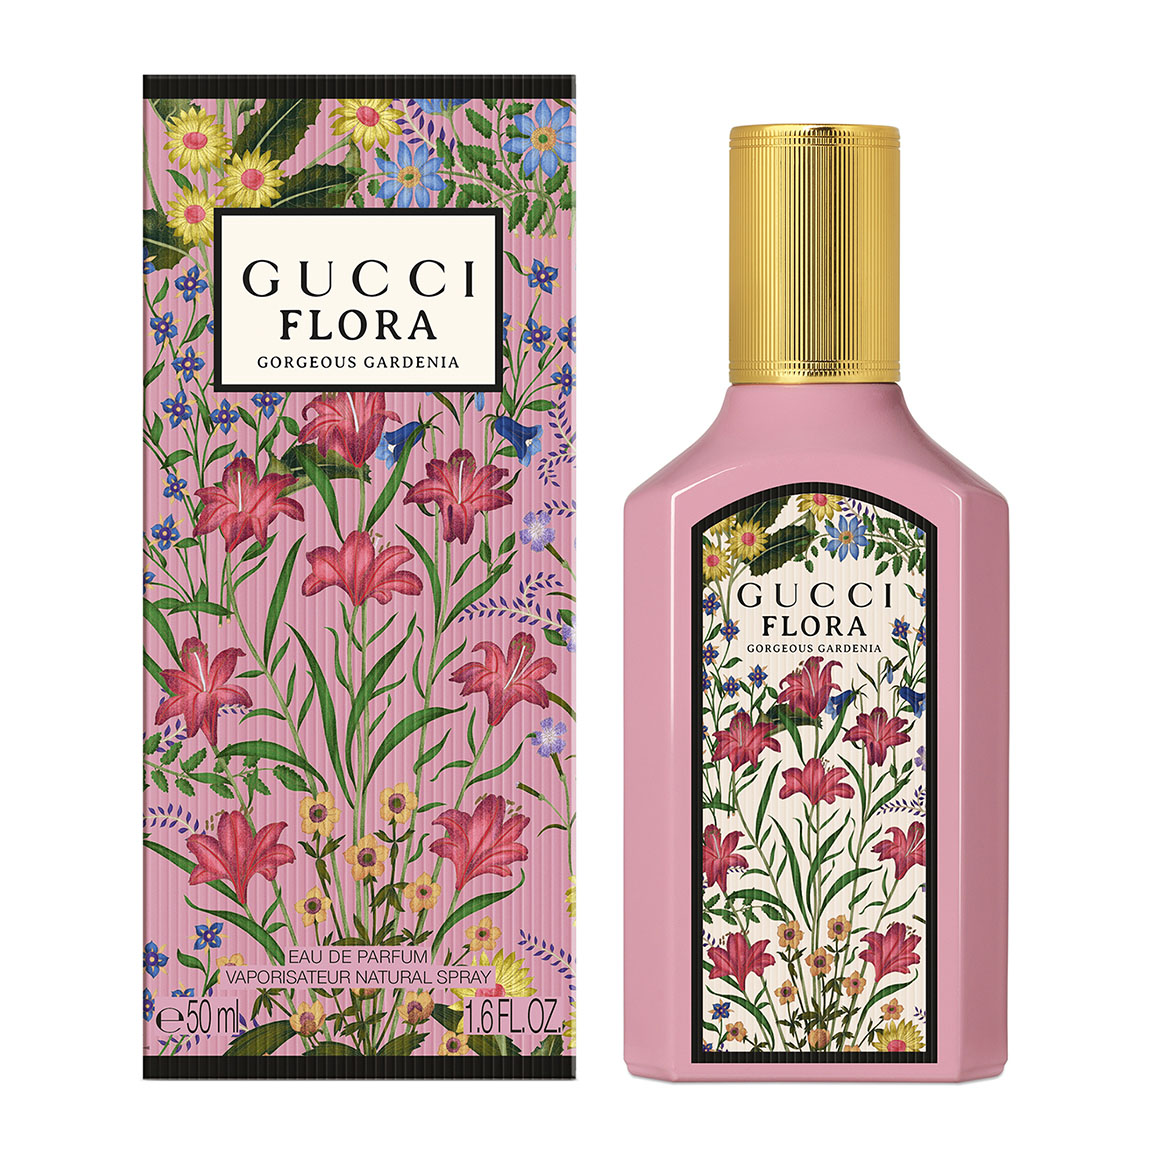 Gucci Flora Gorgeous Gardenia EDP L